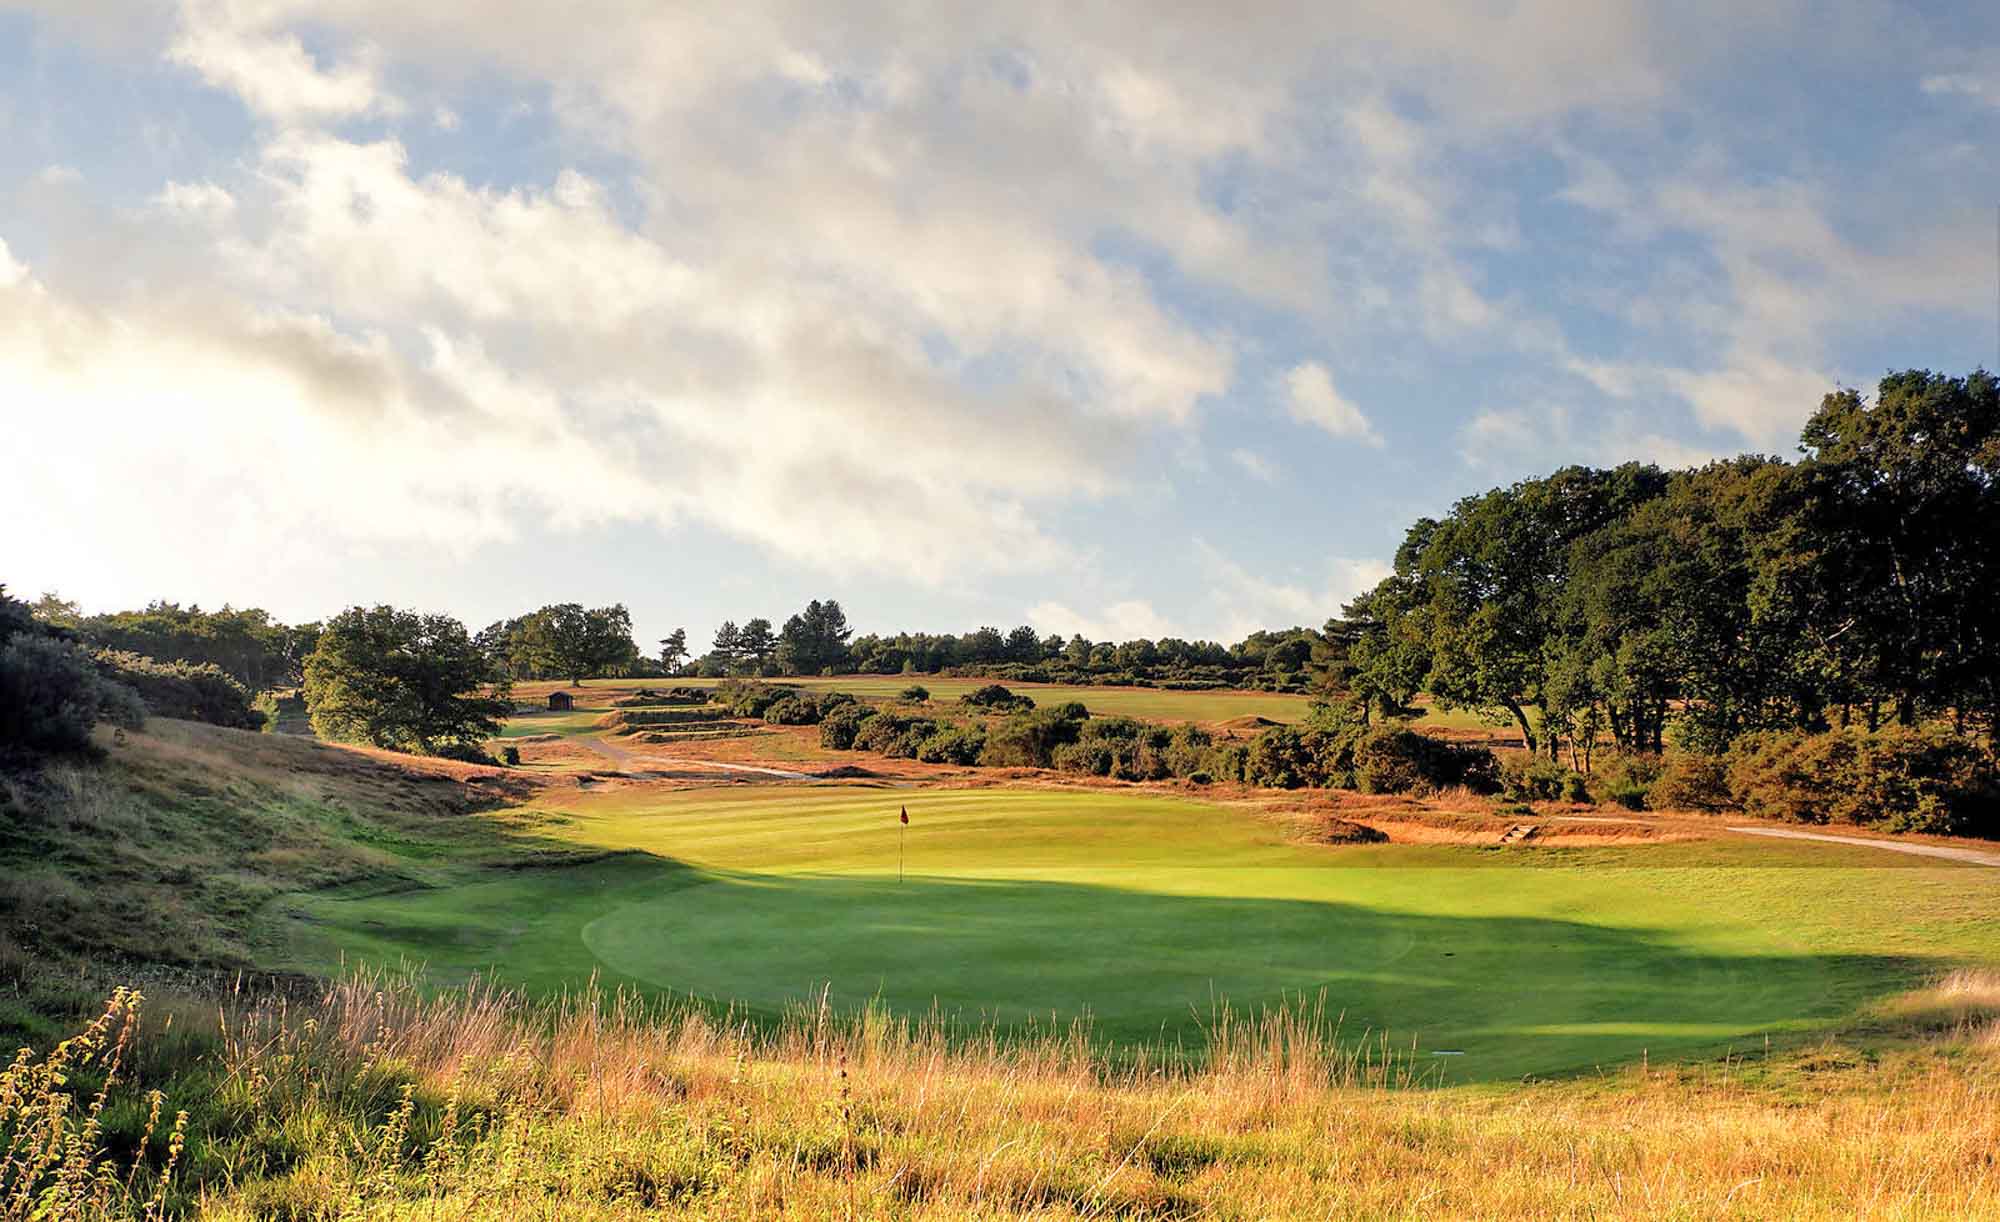 The 15th hole at Woodbridge Golf Club. A rare hidden gem in our Suffolk Travel Guide.